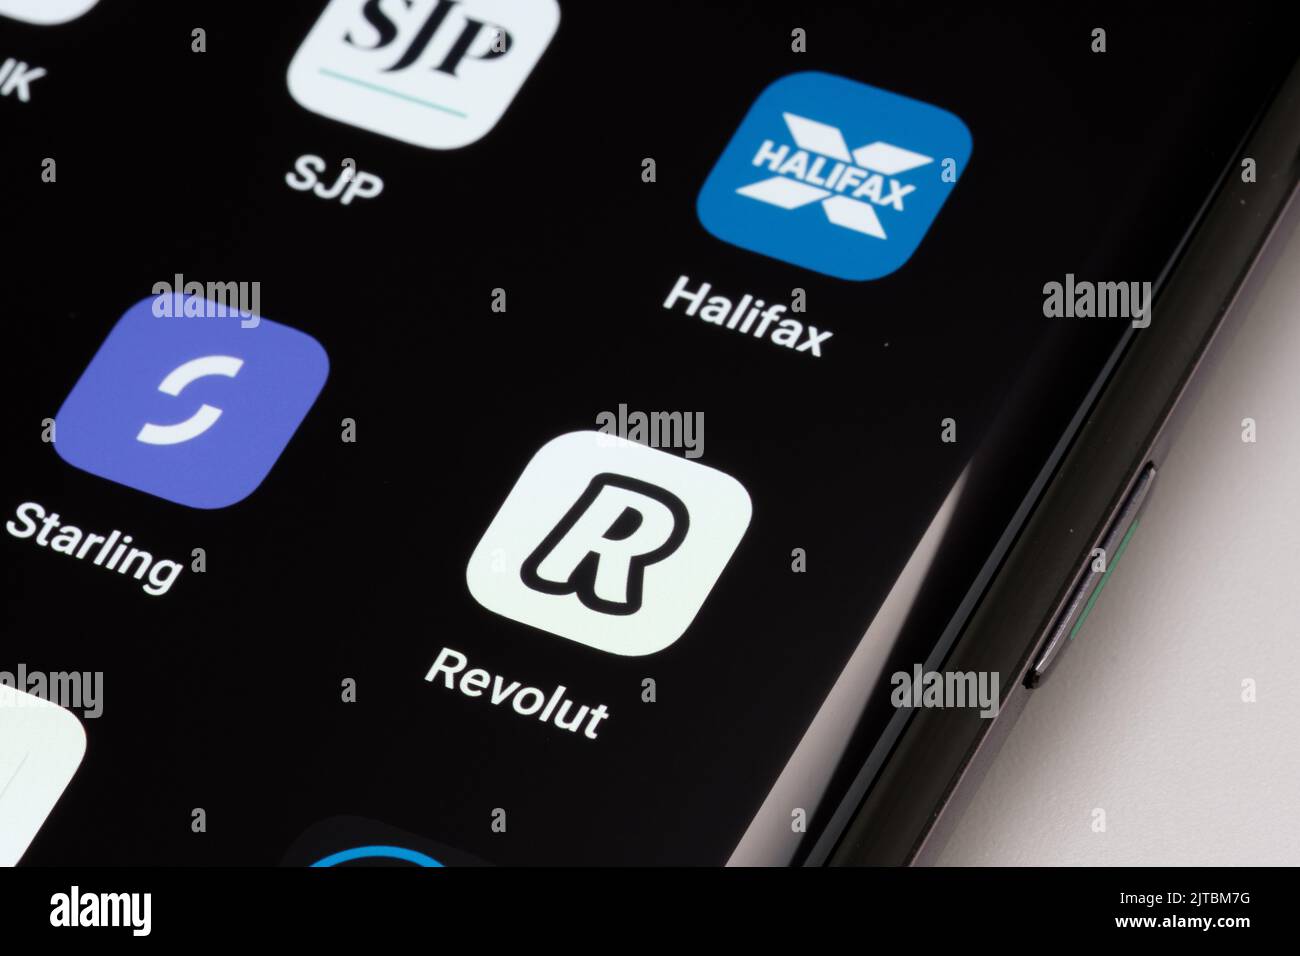 Revolut. Starling, Hailfax SJP apps seen on smartphone Stock Photo